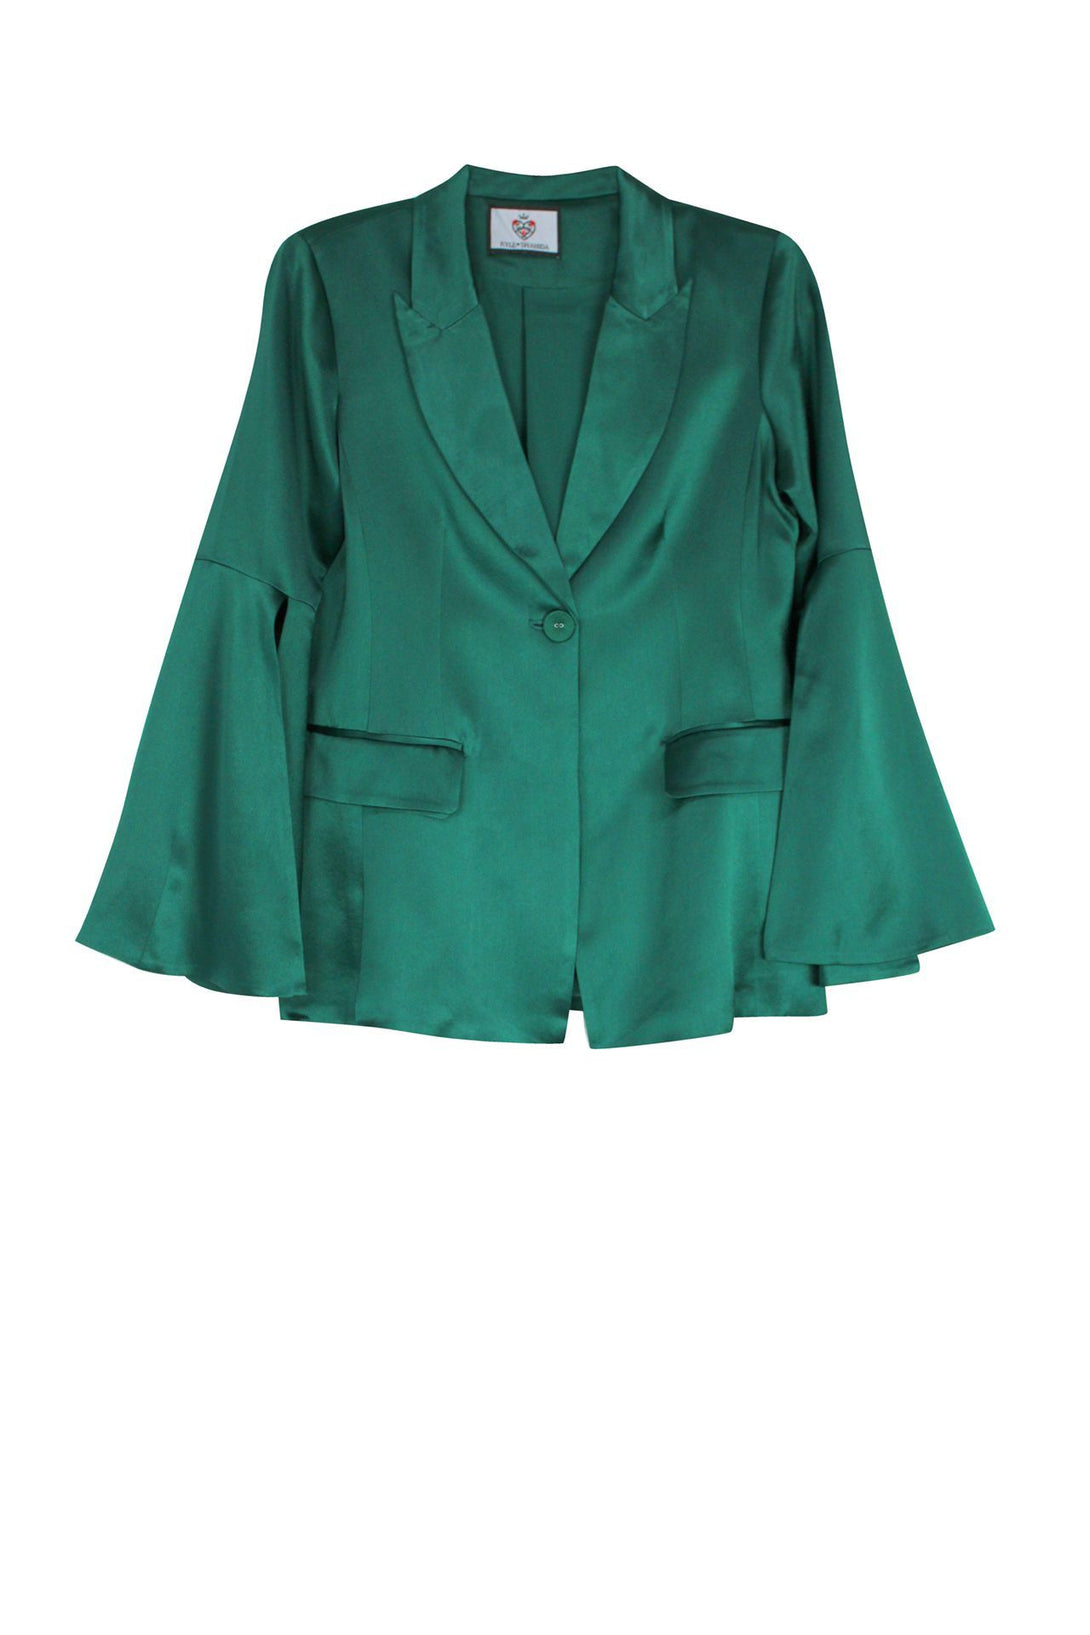 Green-Designer-Jacket-For-Women-By-Kyle-Richards